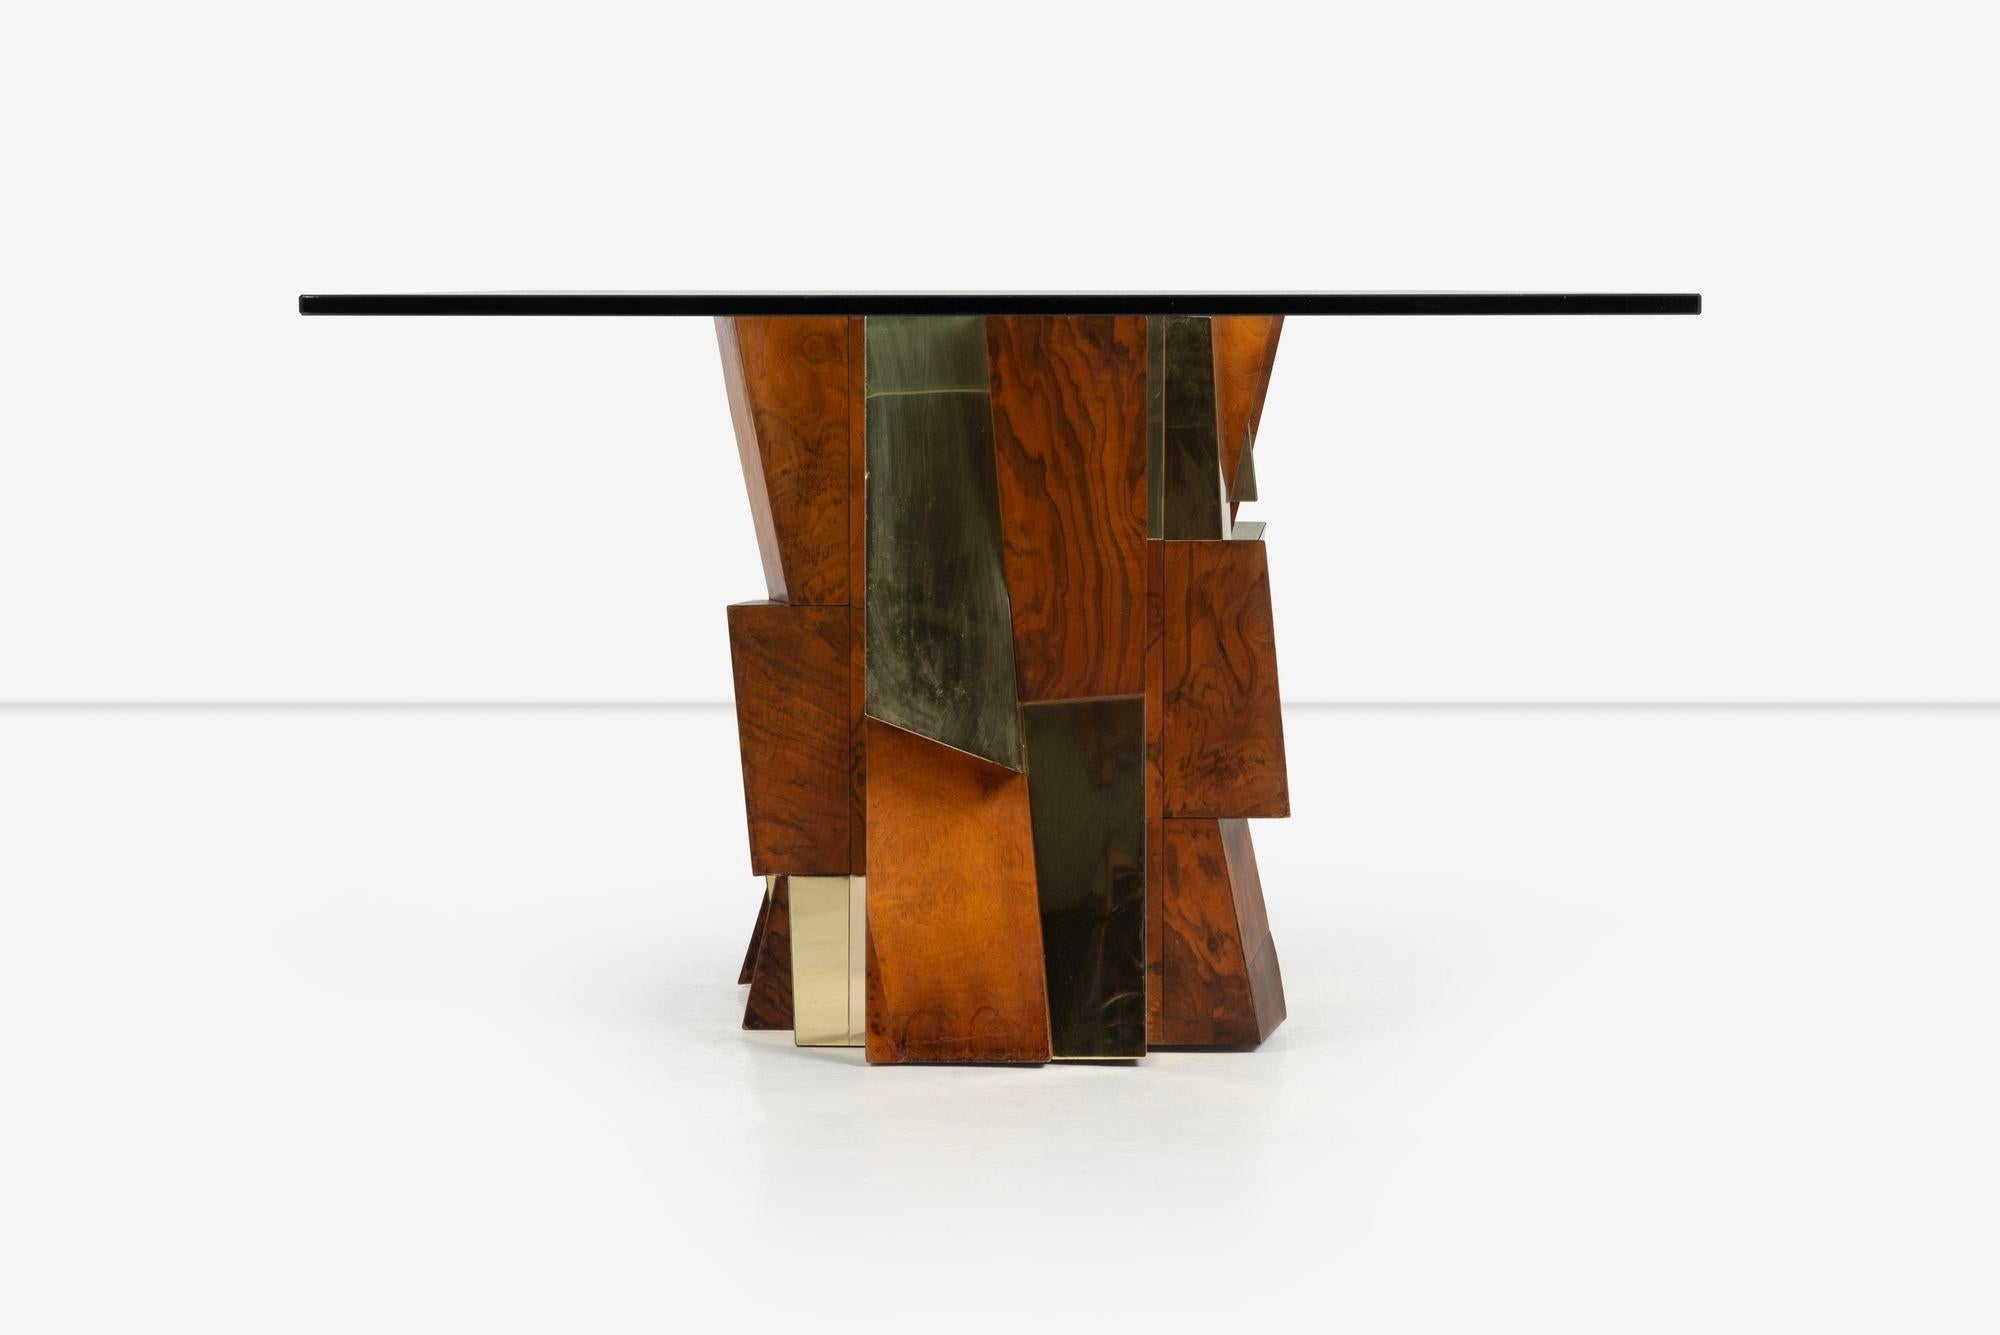 Paul Evans Custom Faceted Dining Table, größeres Gestell mit lackiertem Holz und Messingverkleidung über Holz.
3/4